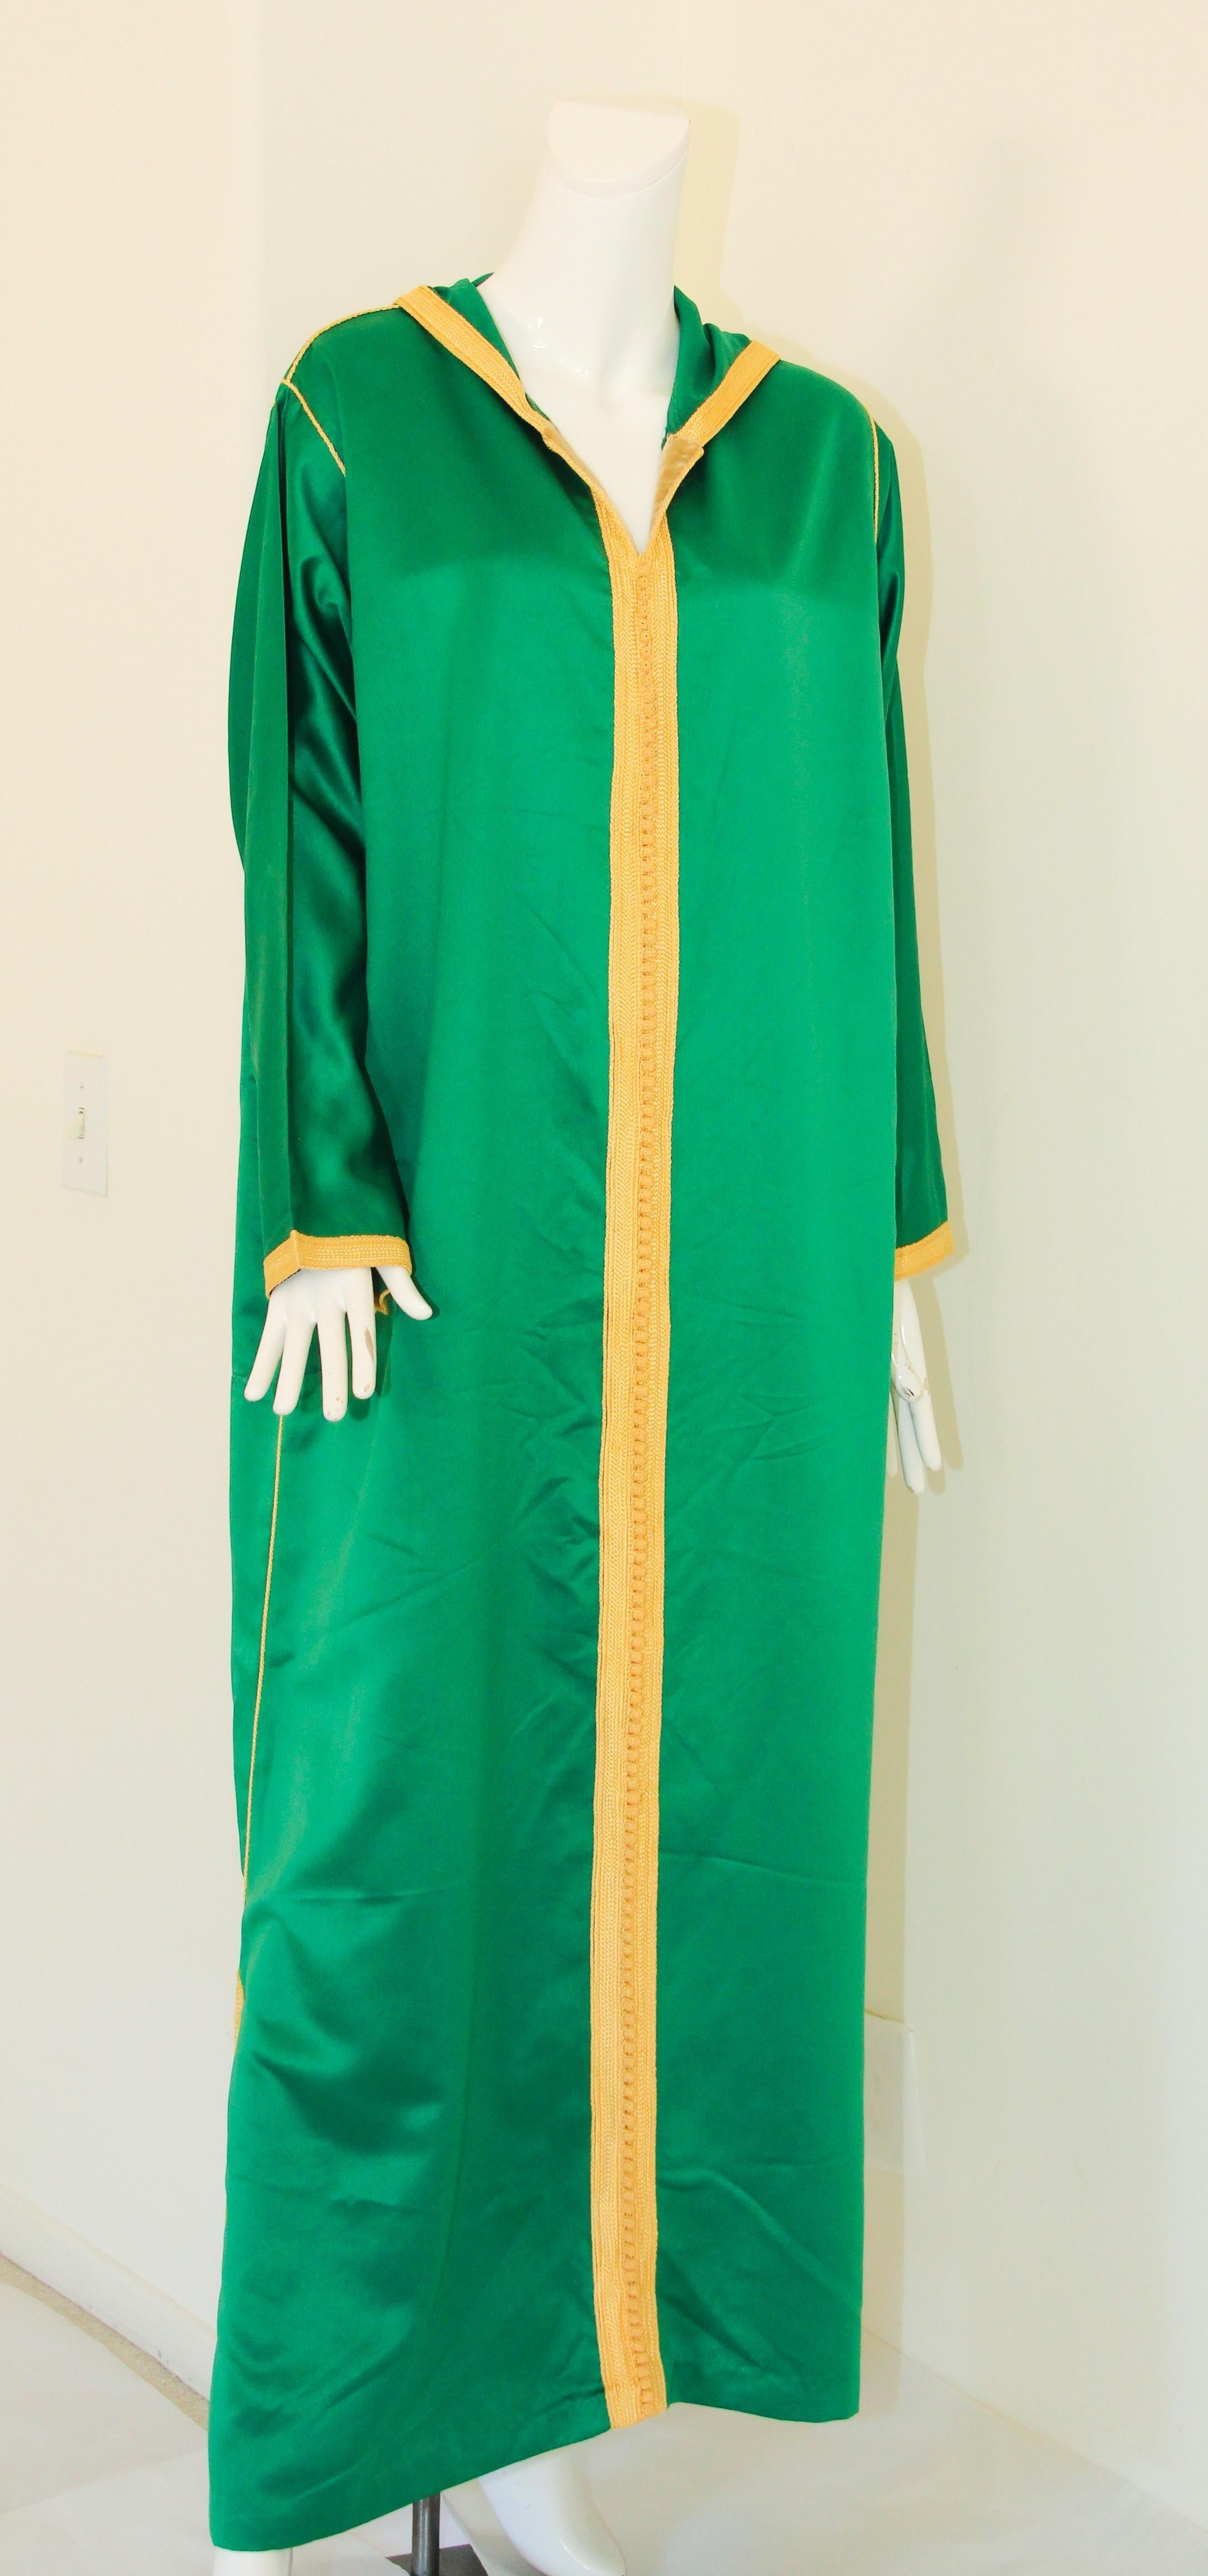 Vert Caftan marocain à capuche Djellabah vert émeraude avec capuche en vente